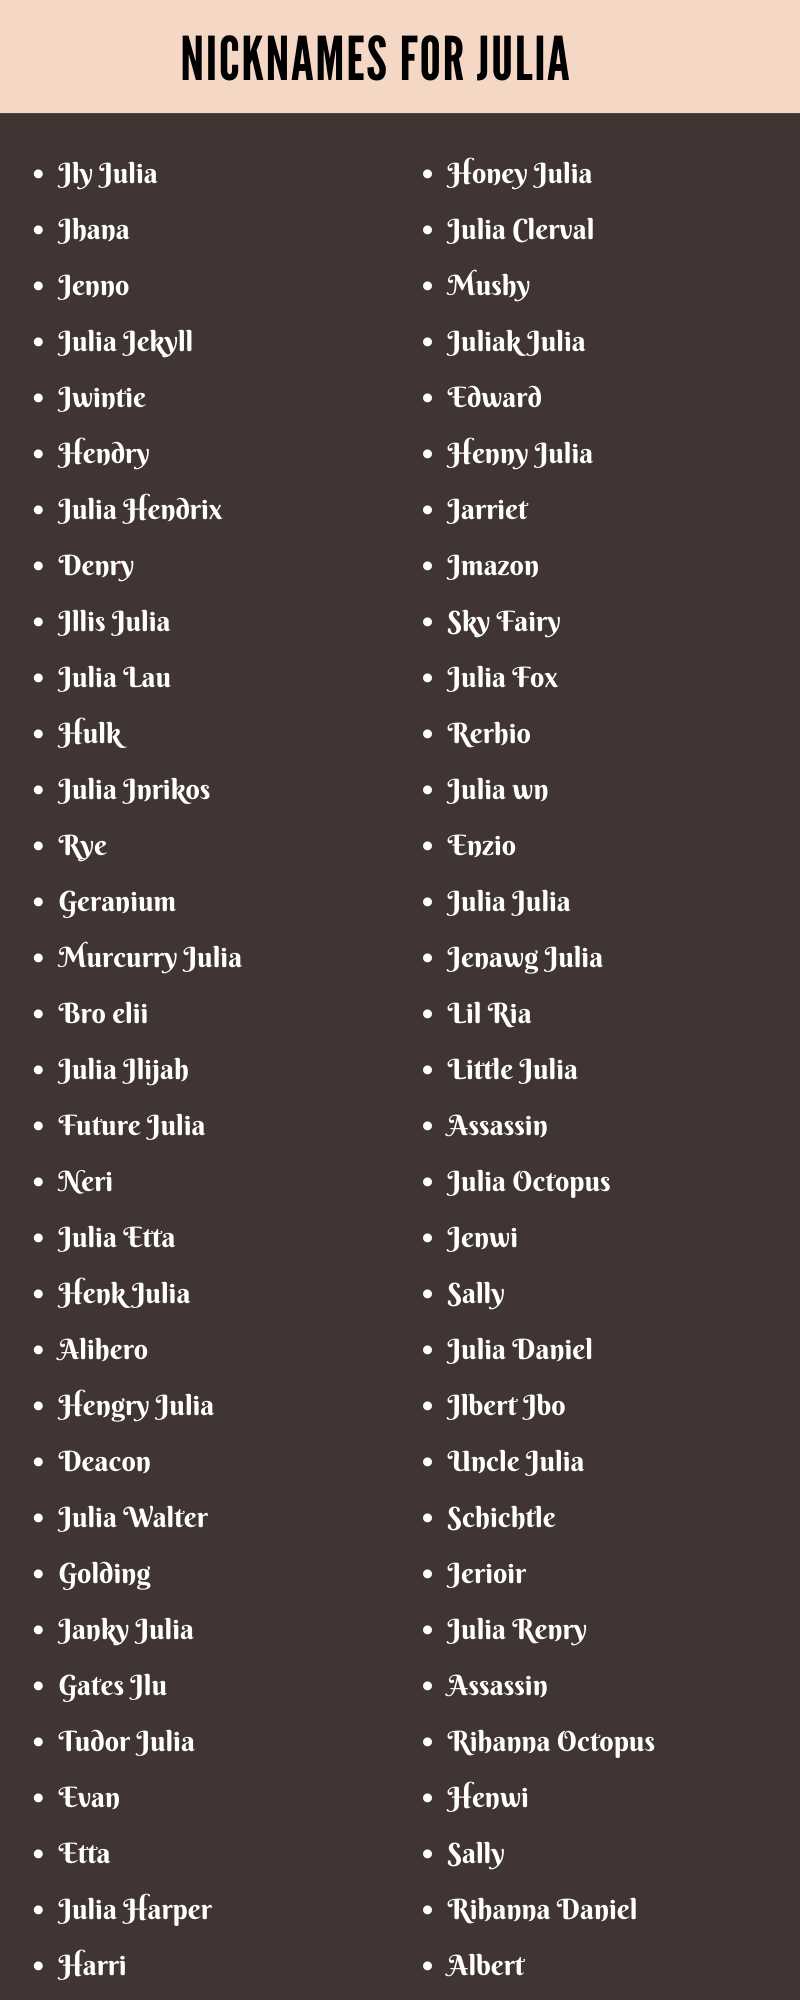 Nicknames for Julia